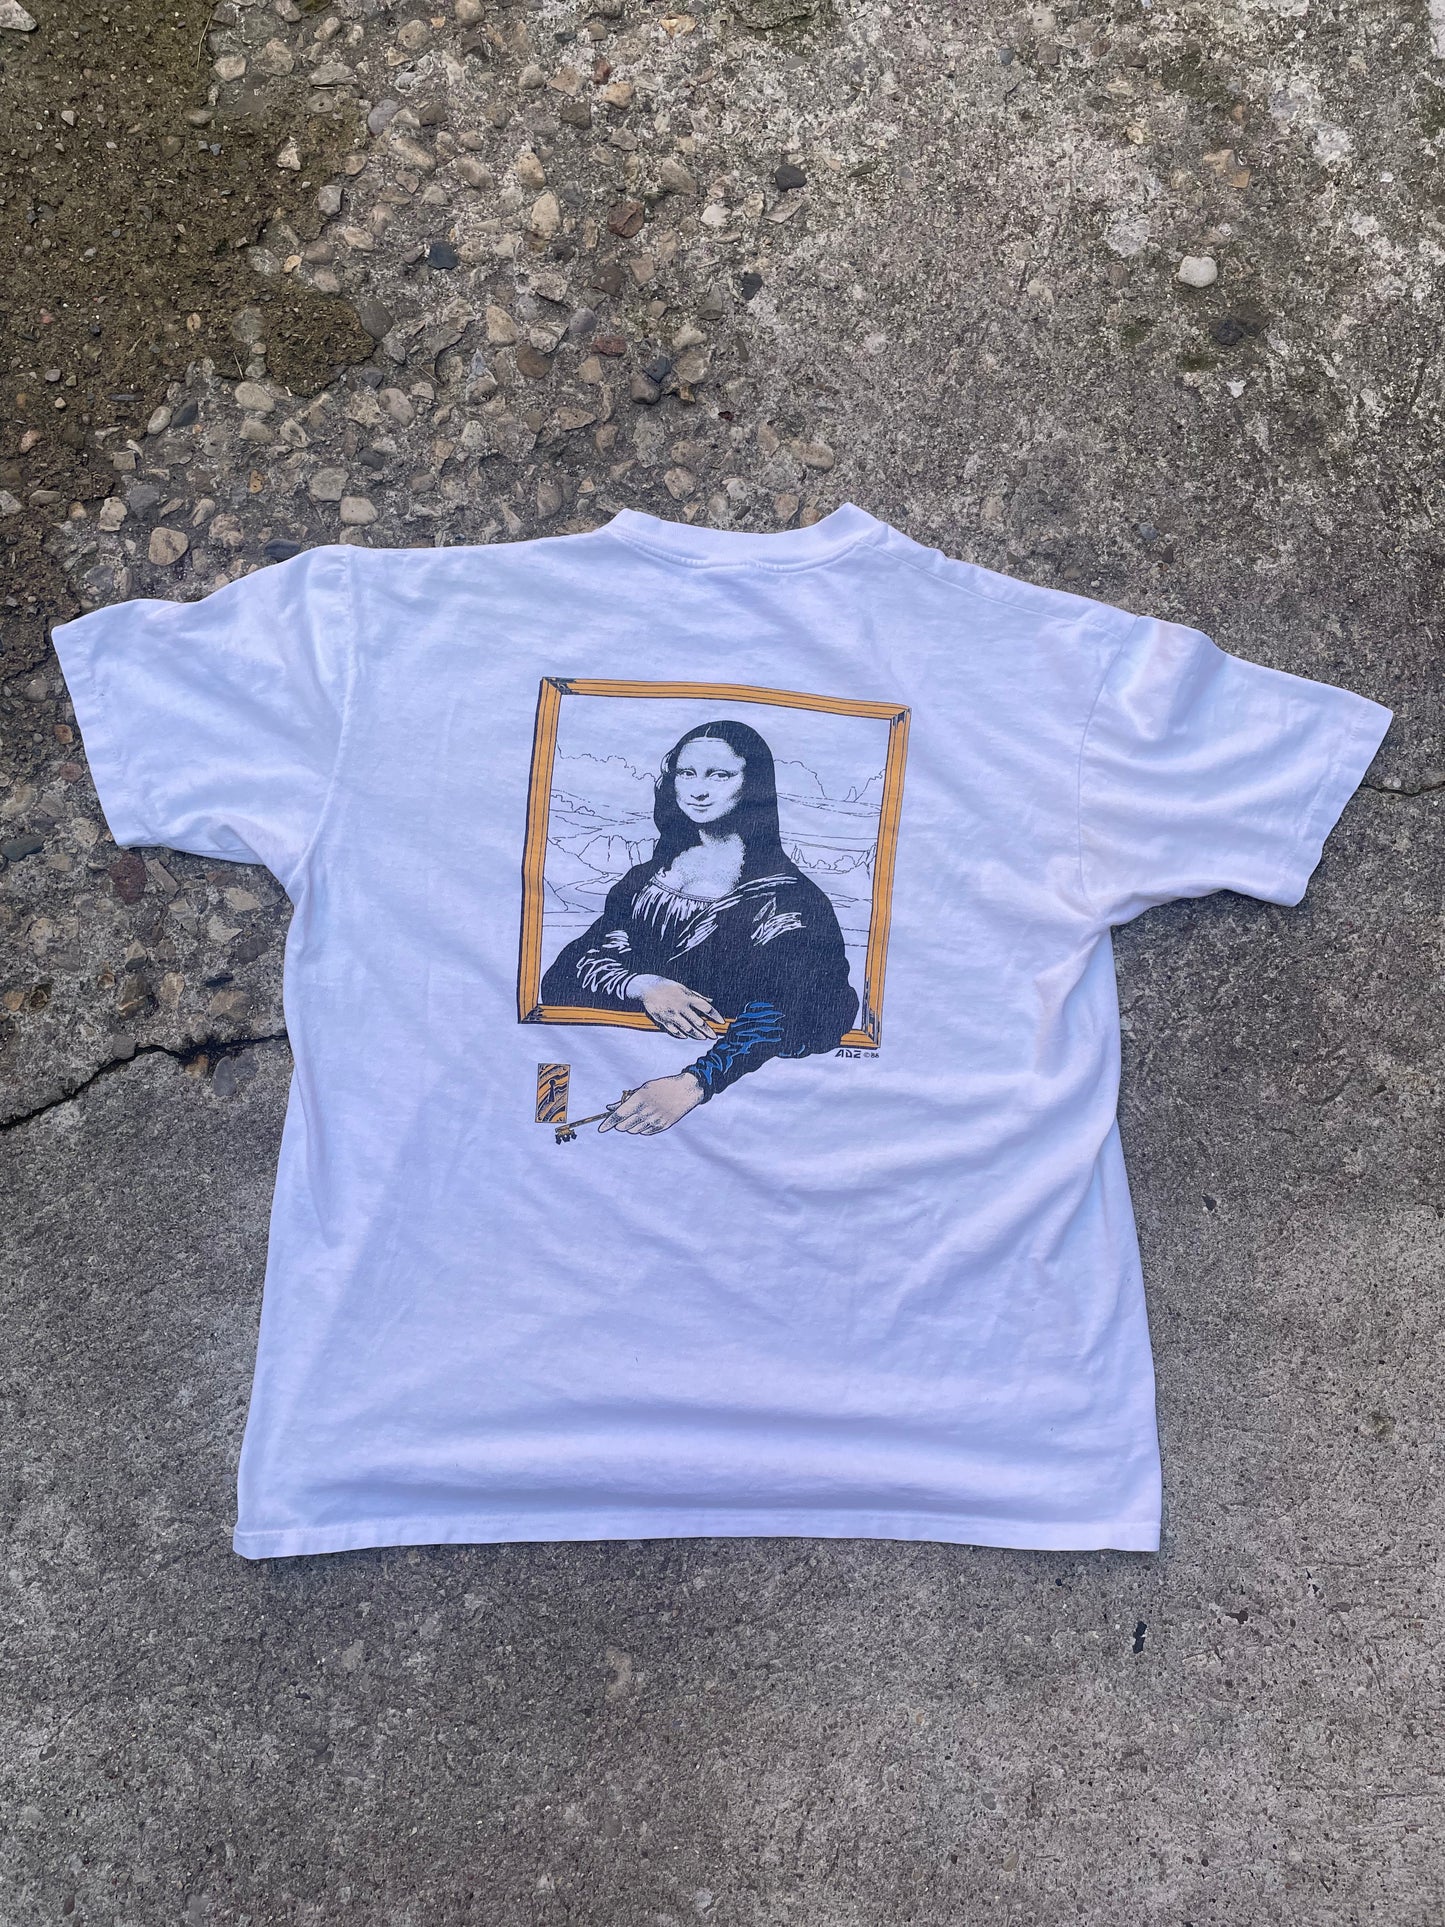 1988 Montreat Youth Conference Mona Lisa Art T-Shirt - XL